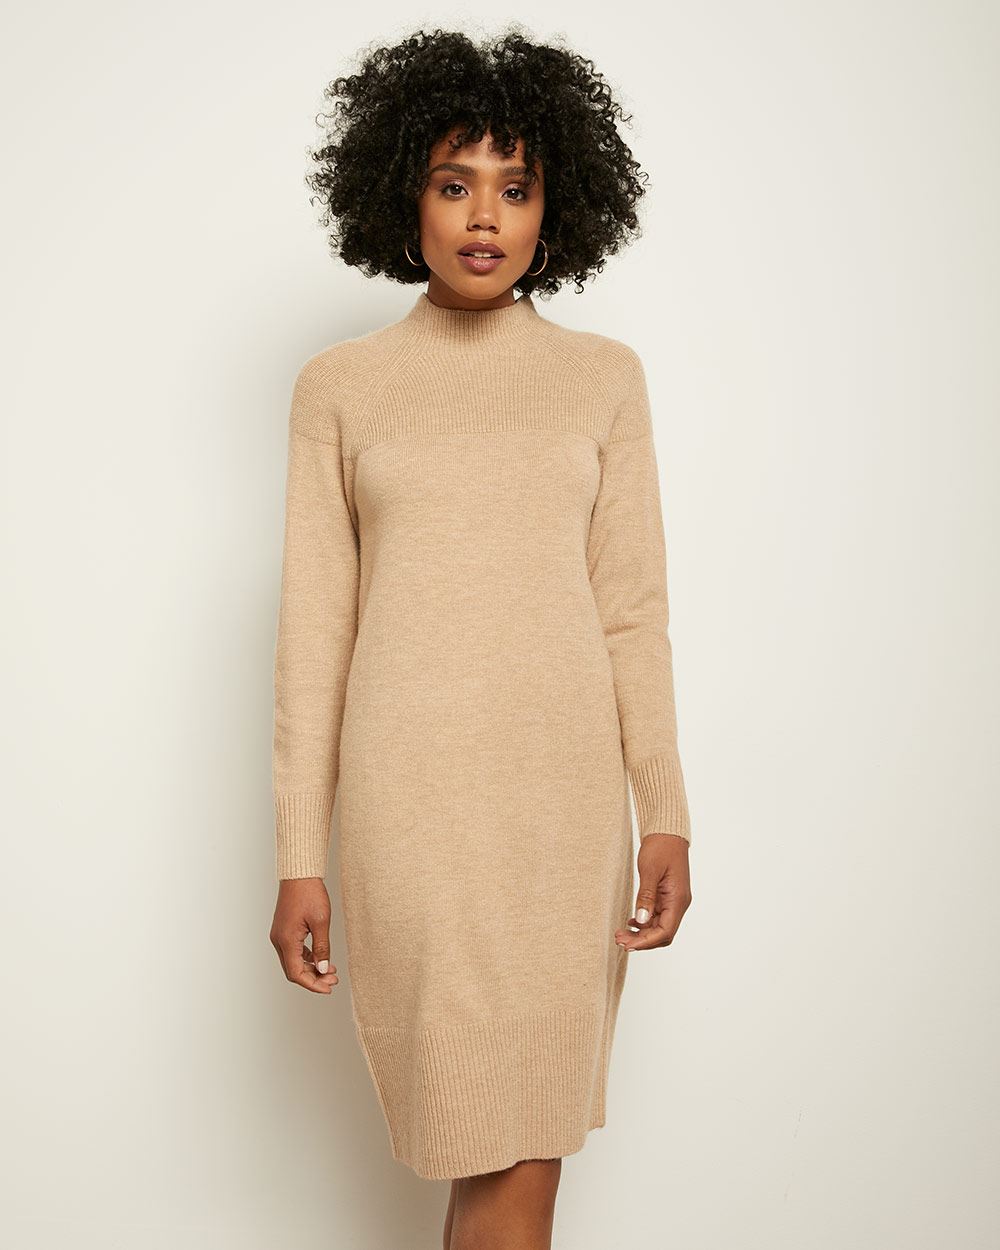 Spongy Knit Mock-Neck Sweater Dress | RW&CO.